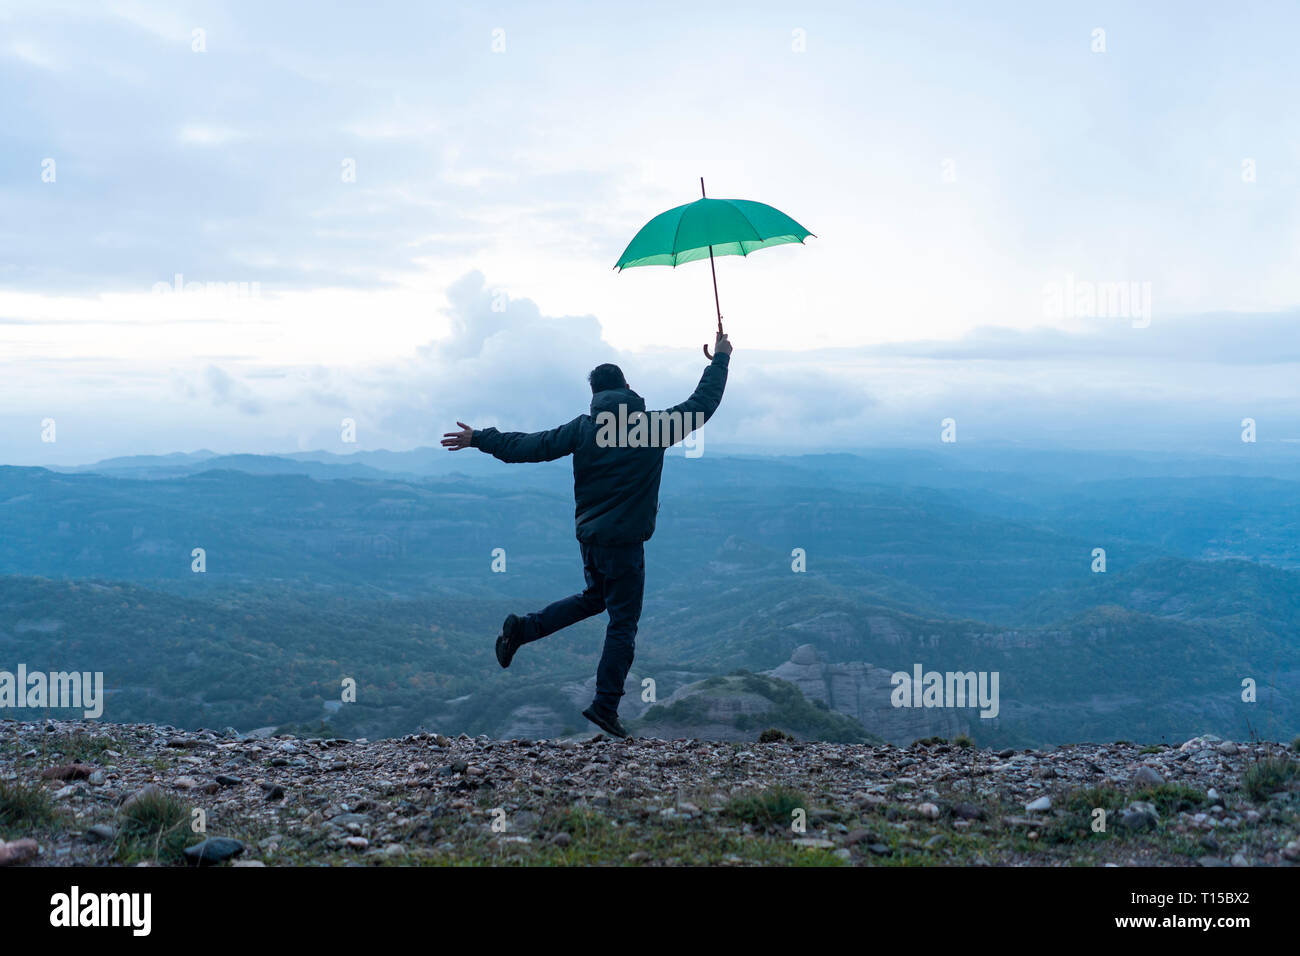 Man jumping for joy on a mountain, holding a green umbrella Stock Photo